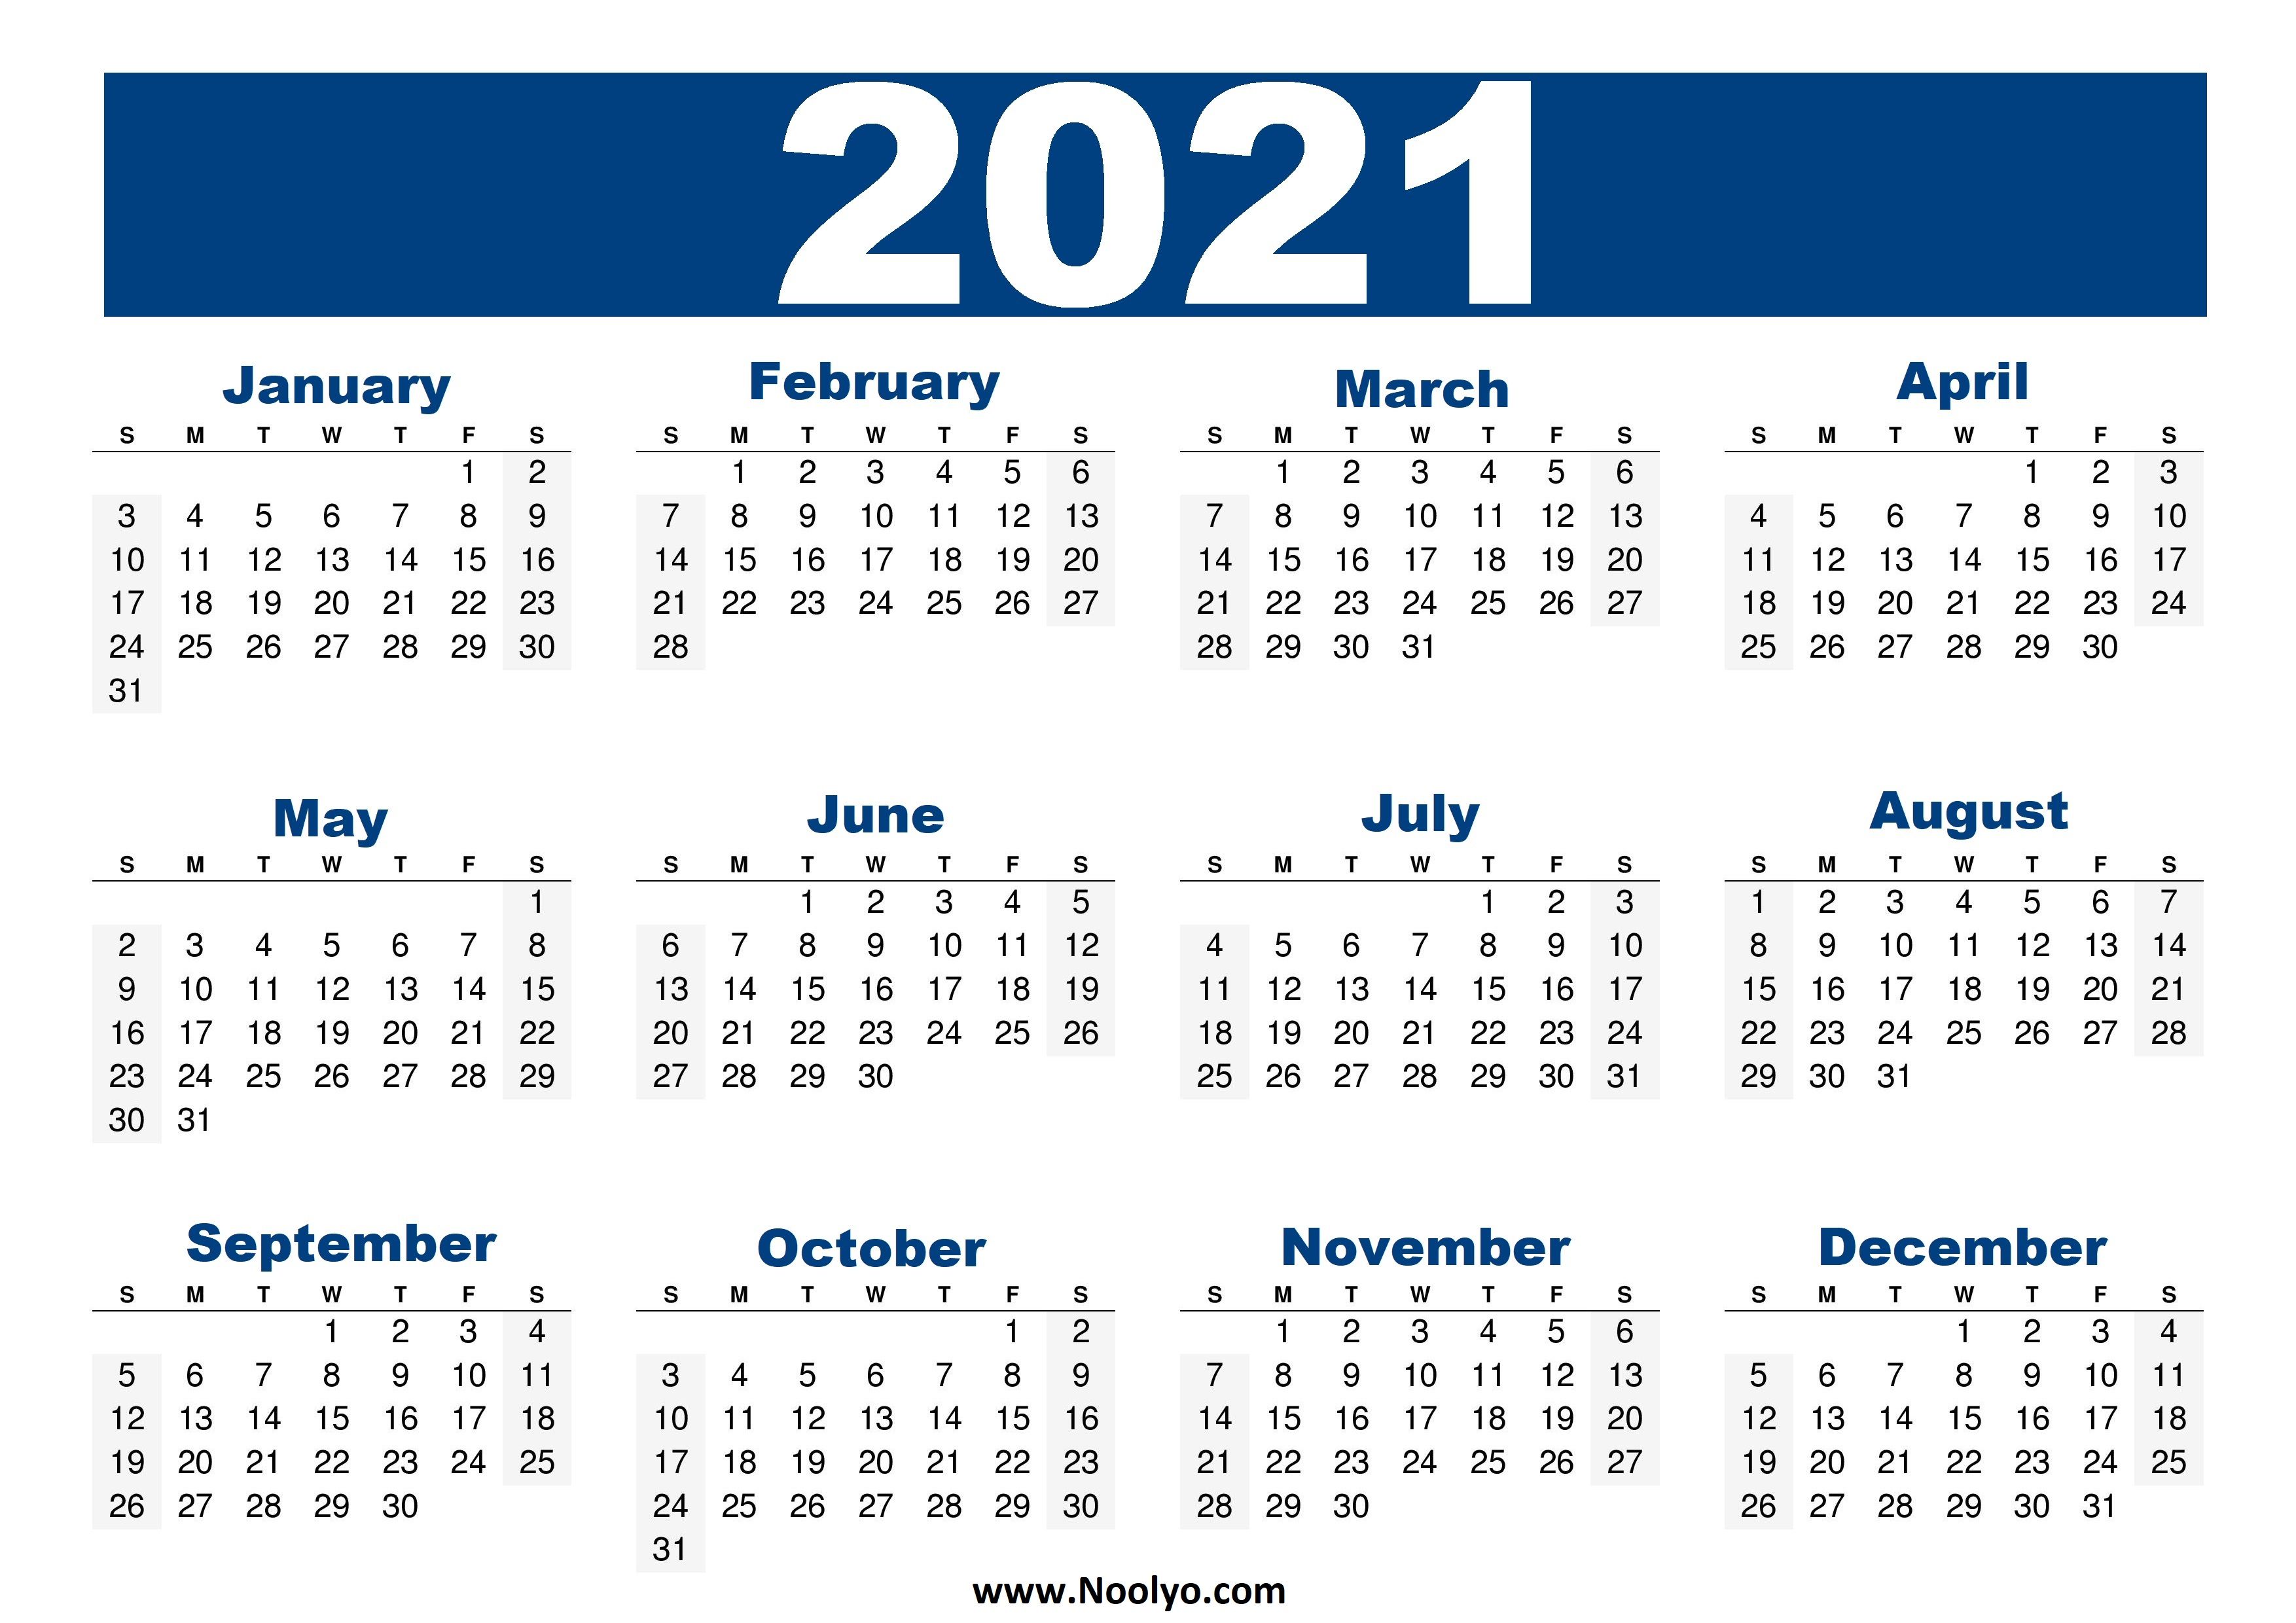 Calendar 2021 Wallpapers - Wallpaper Cave